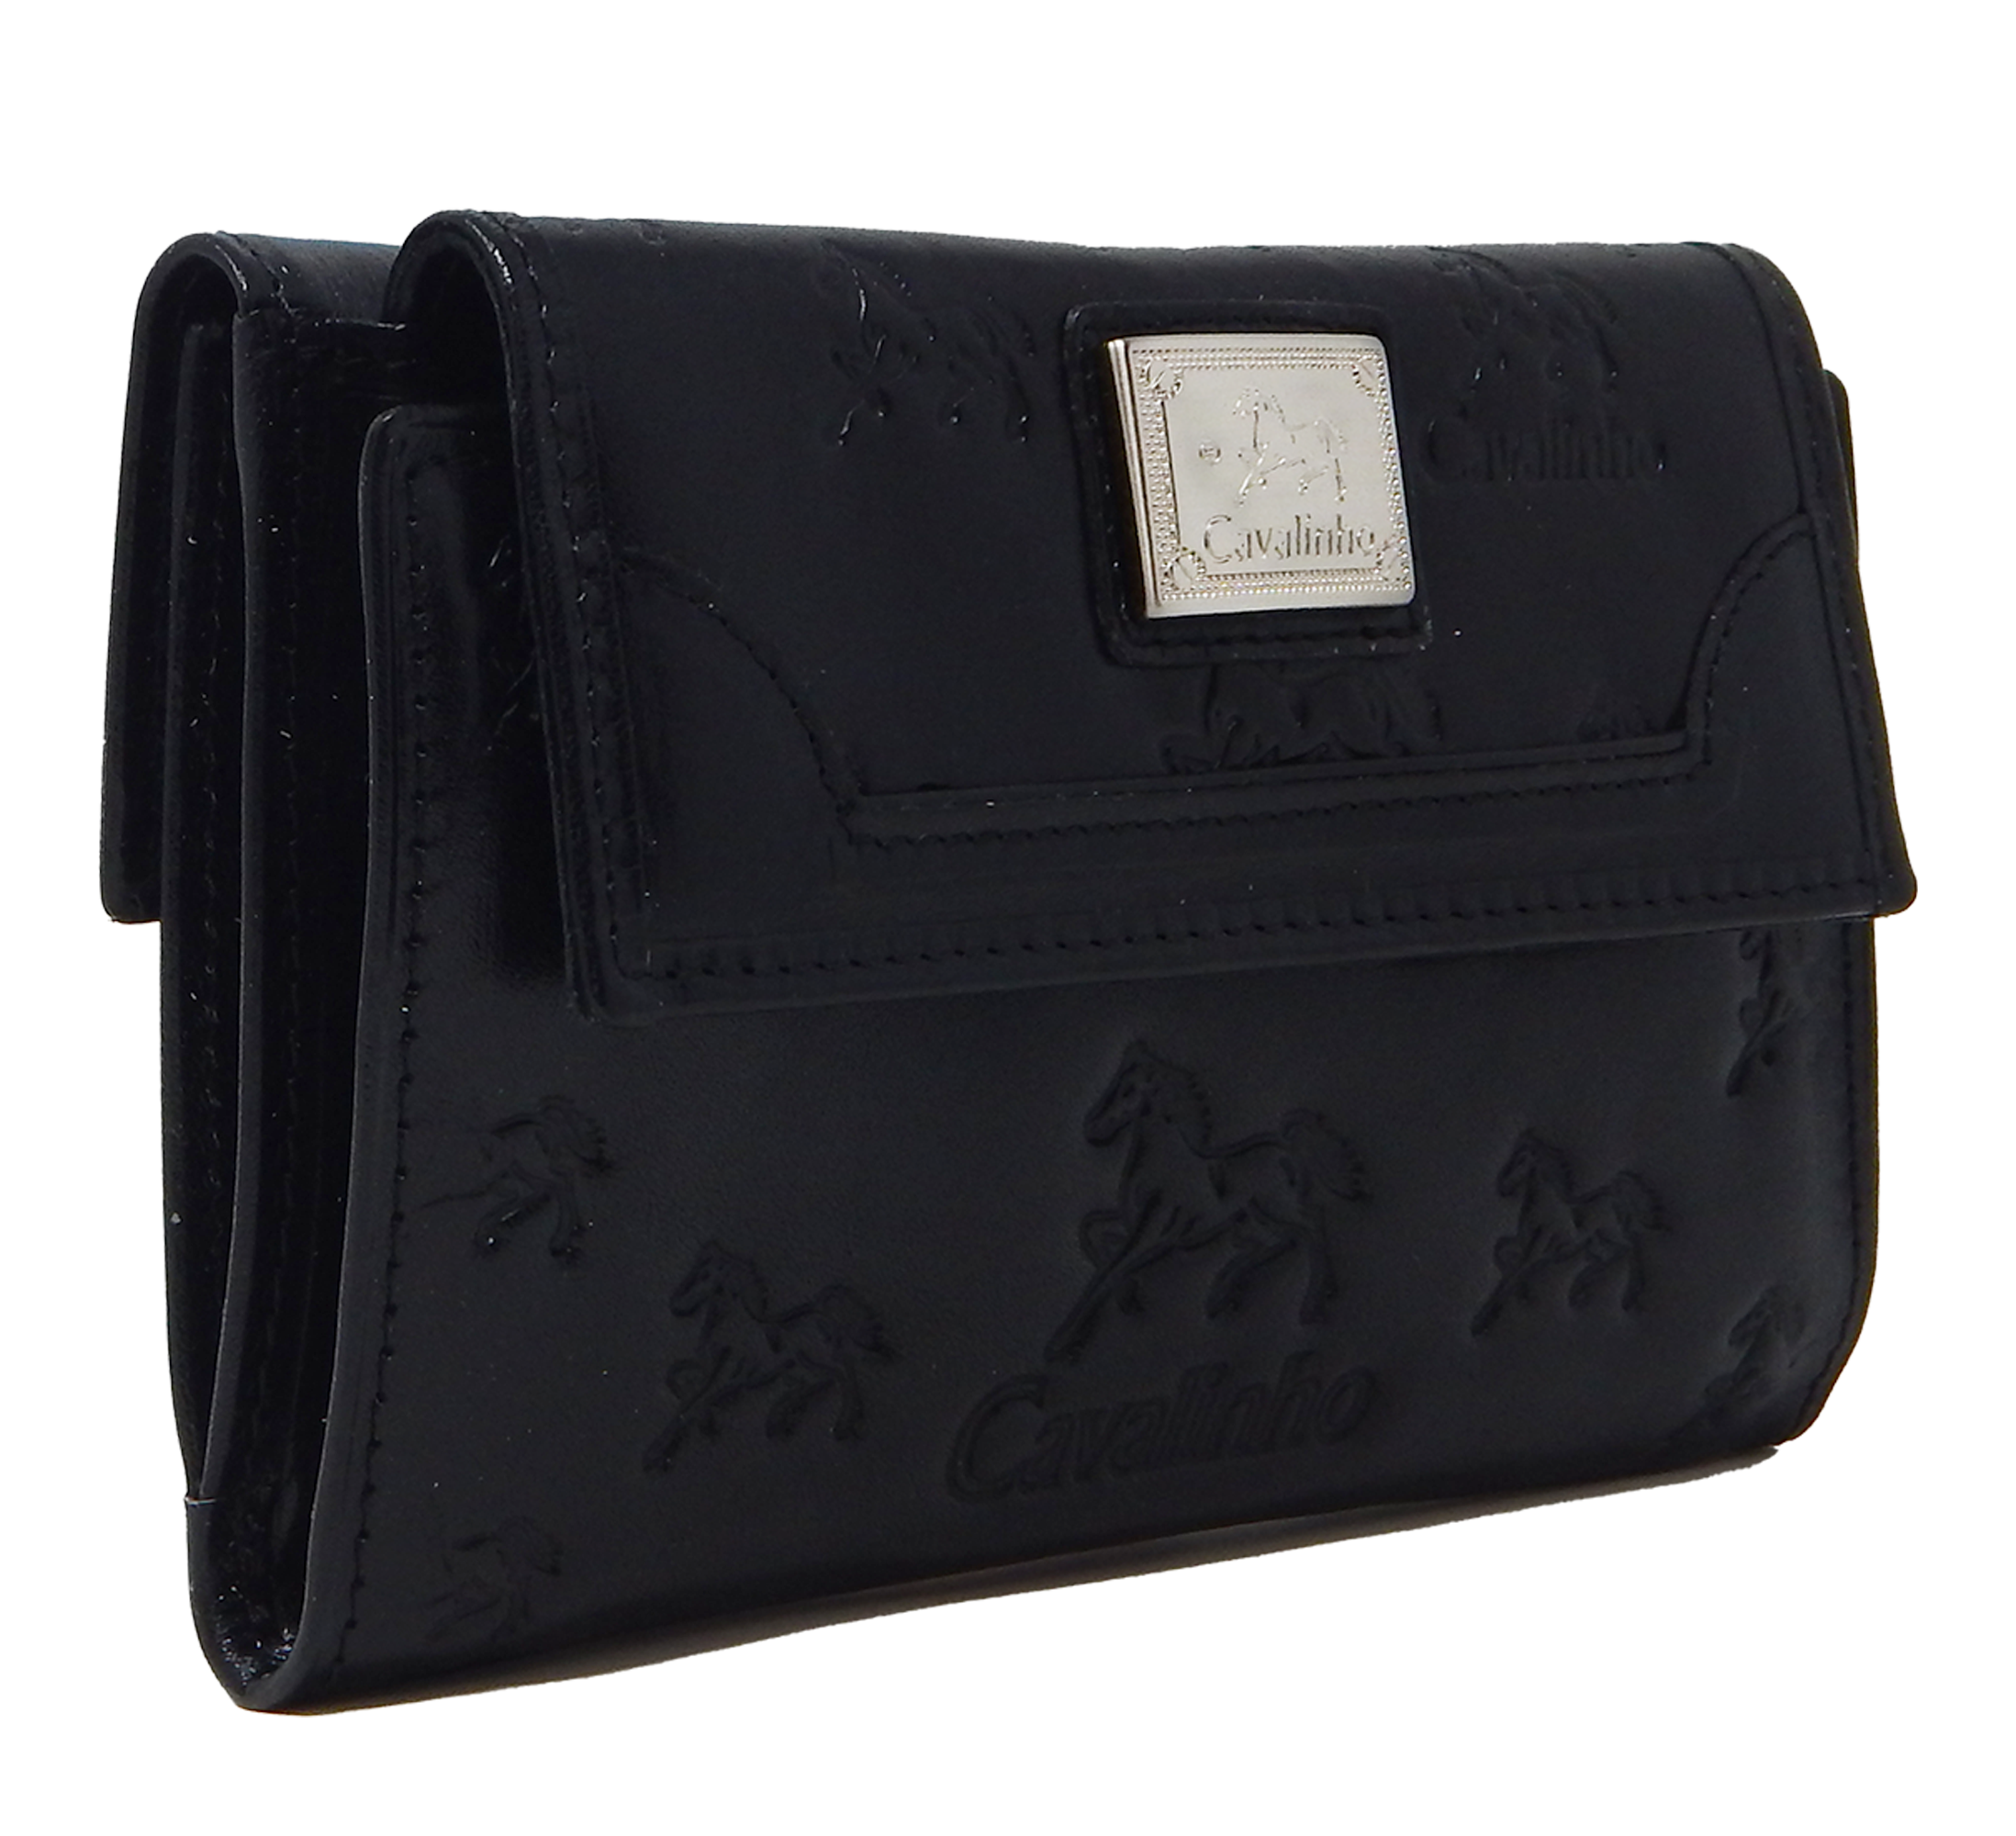 #color_ Black | Cavalinho Cavalo Lusitano Leather Wallet - Black - 28090202_02